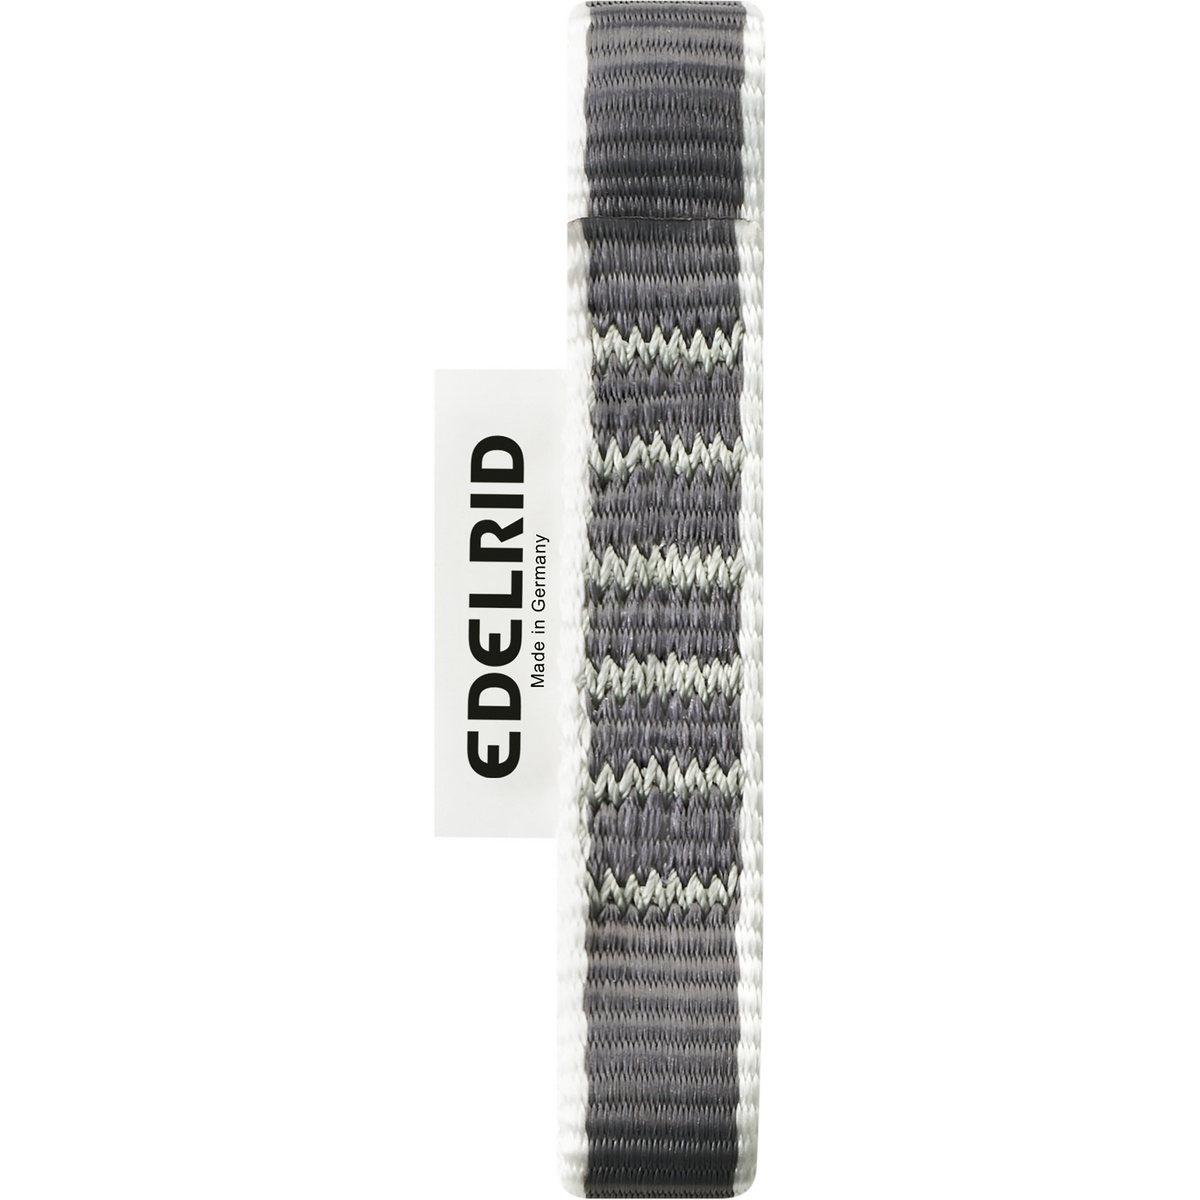 Edelrid Pes 16mm Expressschlinge von Edelrid